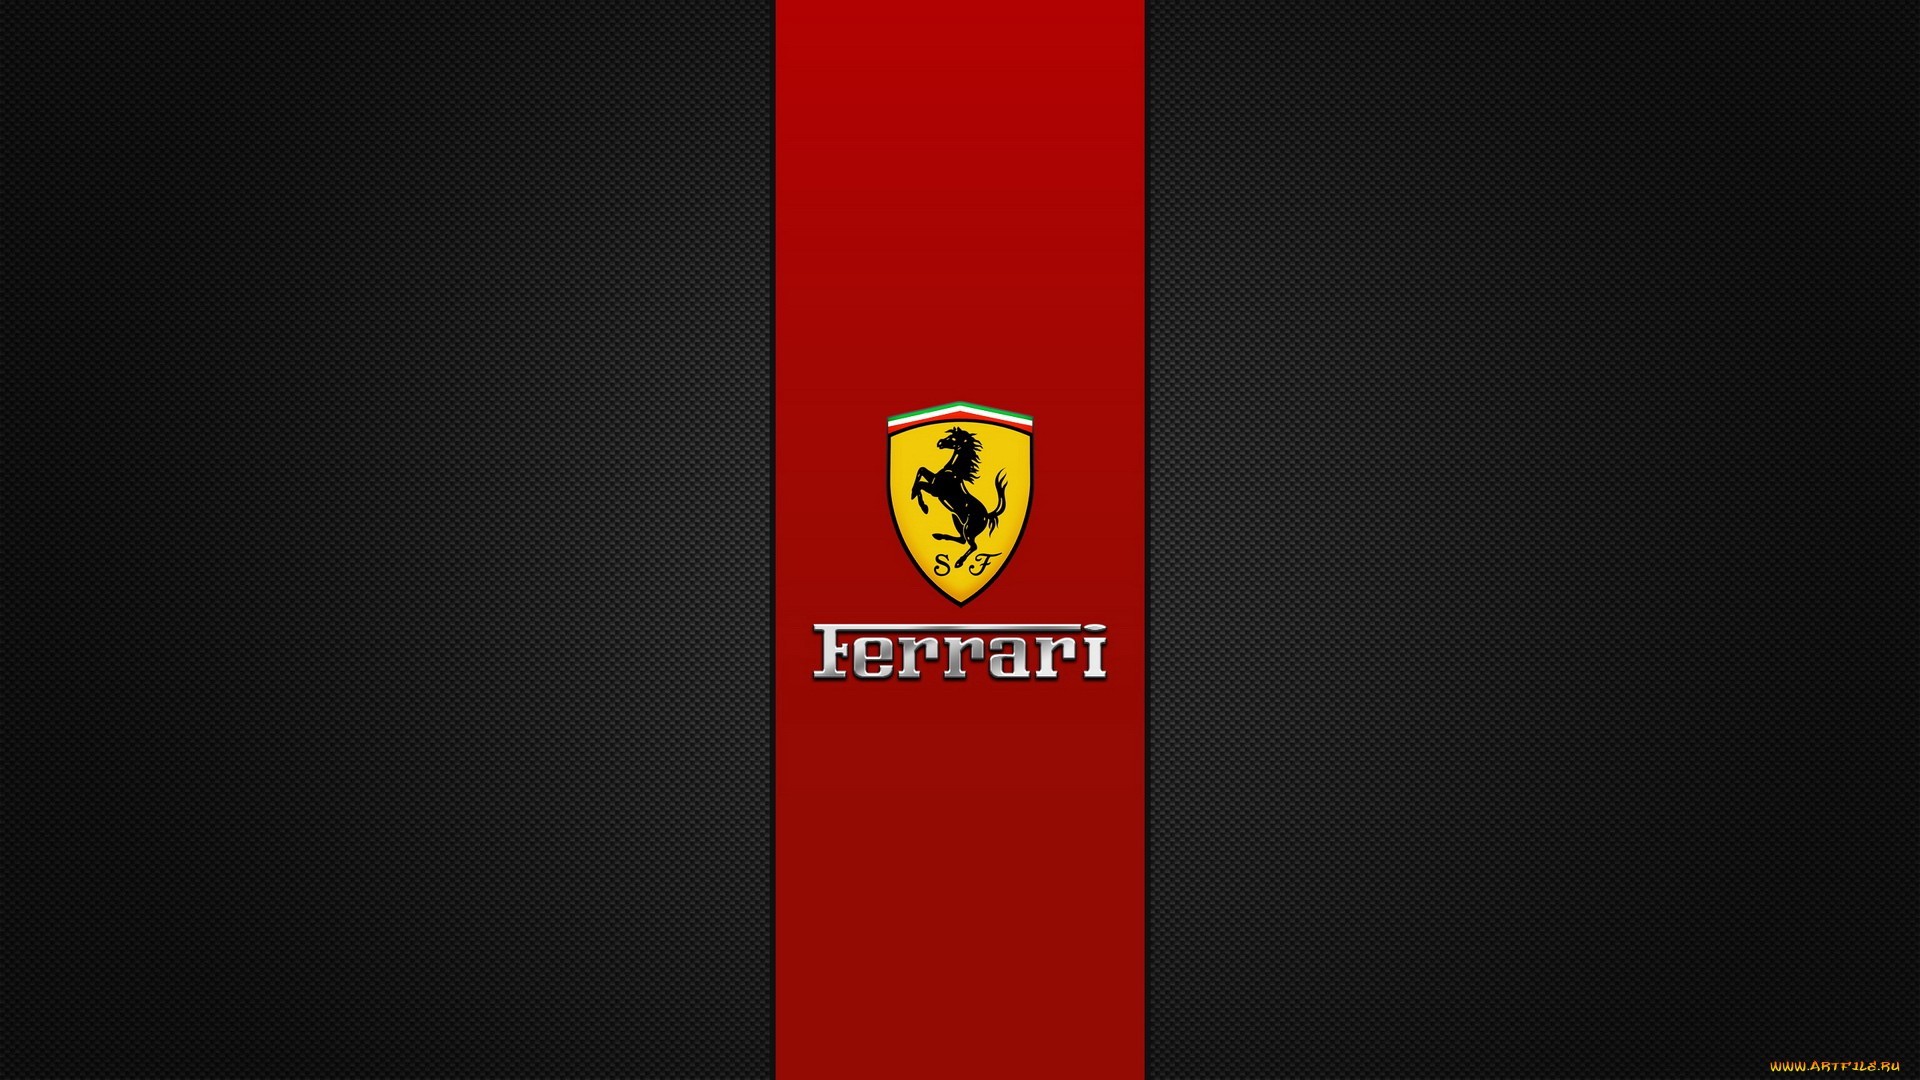 HQ Ferrari Background Images